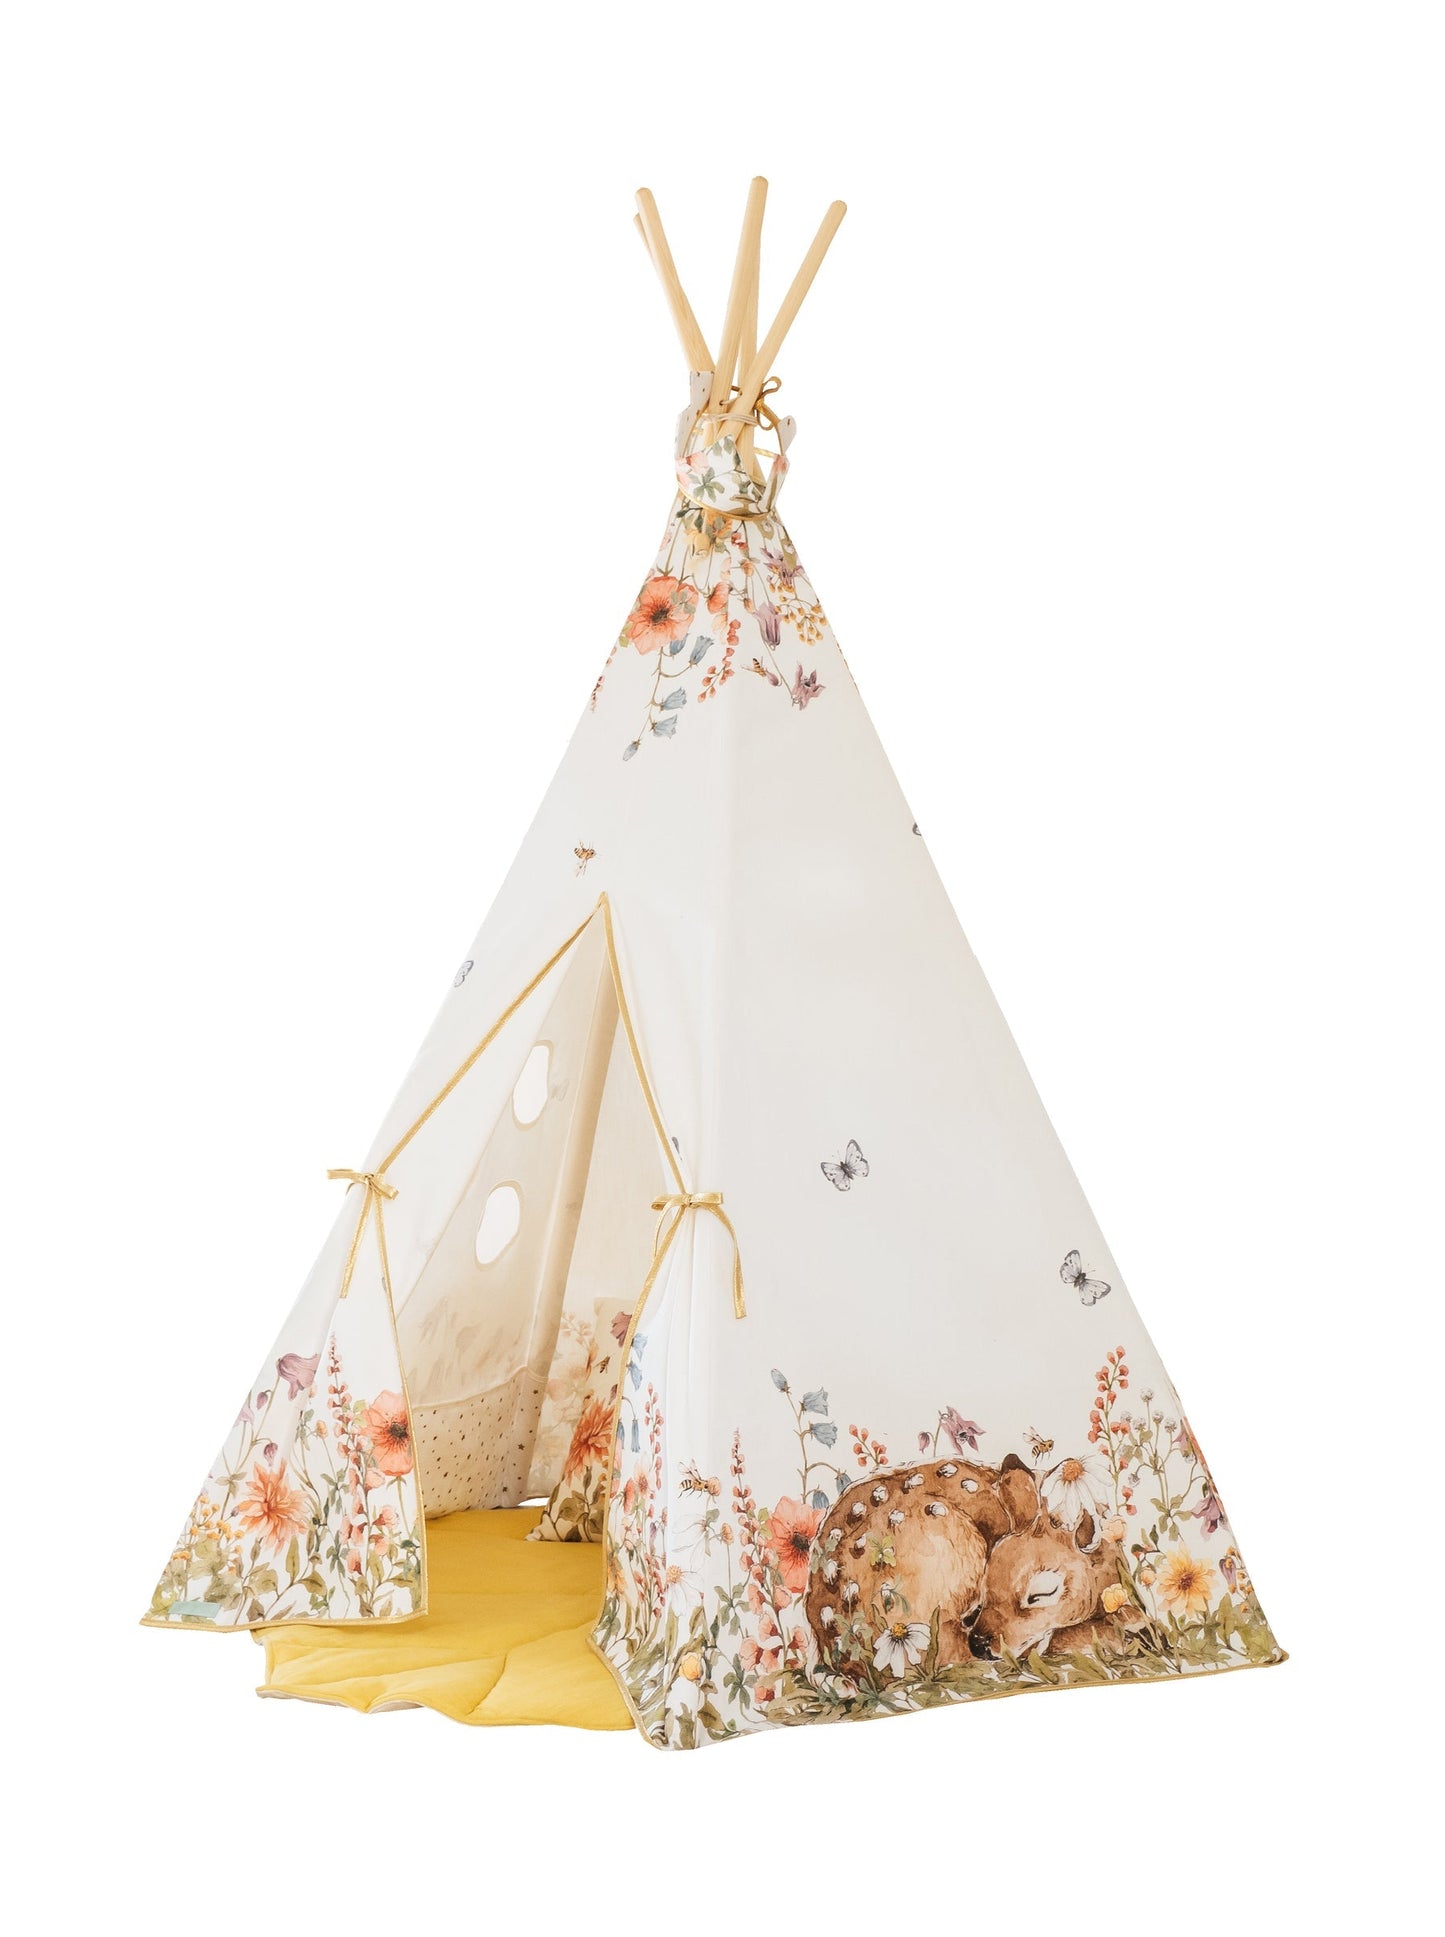 Teepee Tent “Wildflowers” + "Powder Pink" Leaf Mat Set